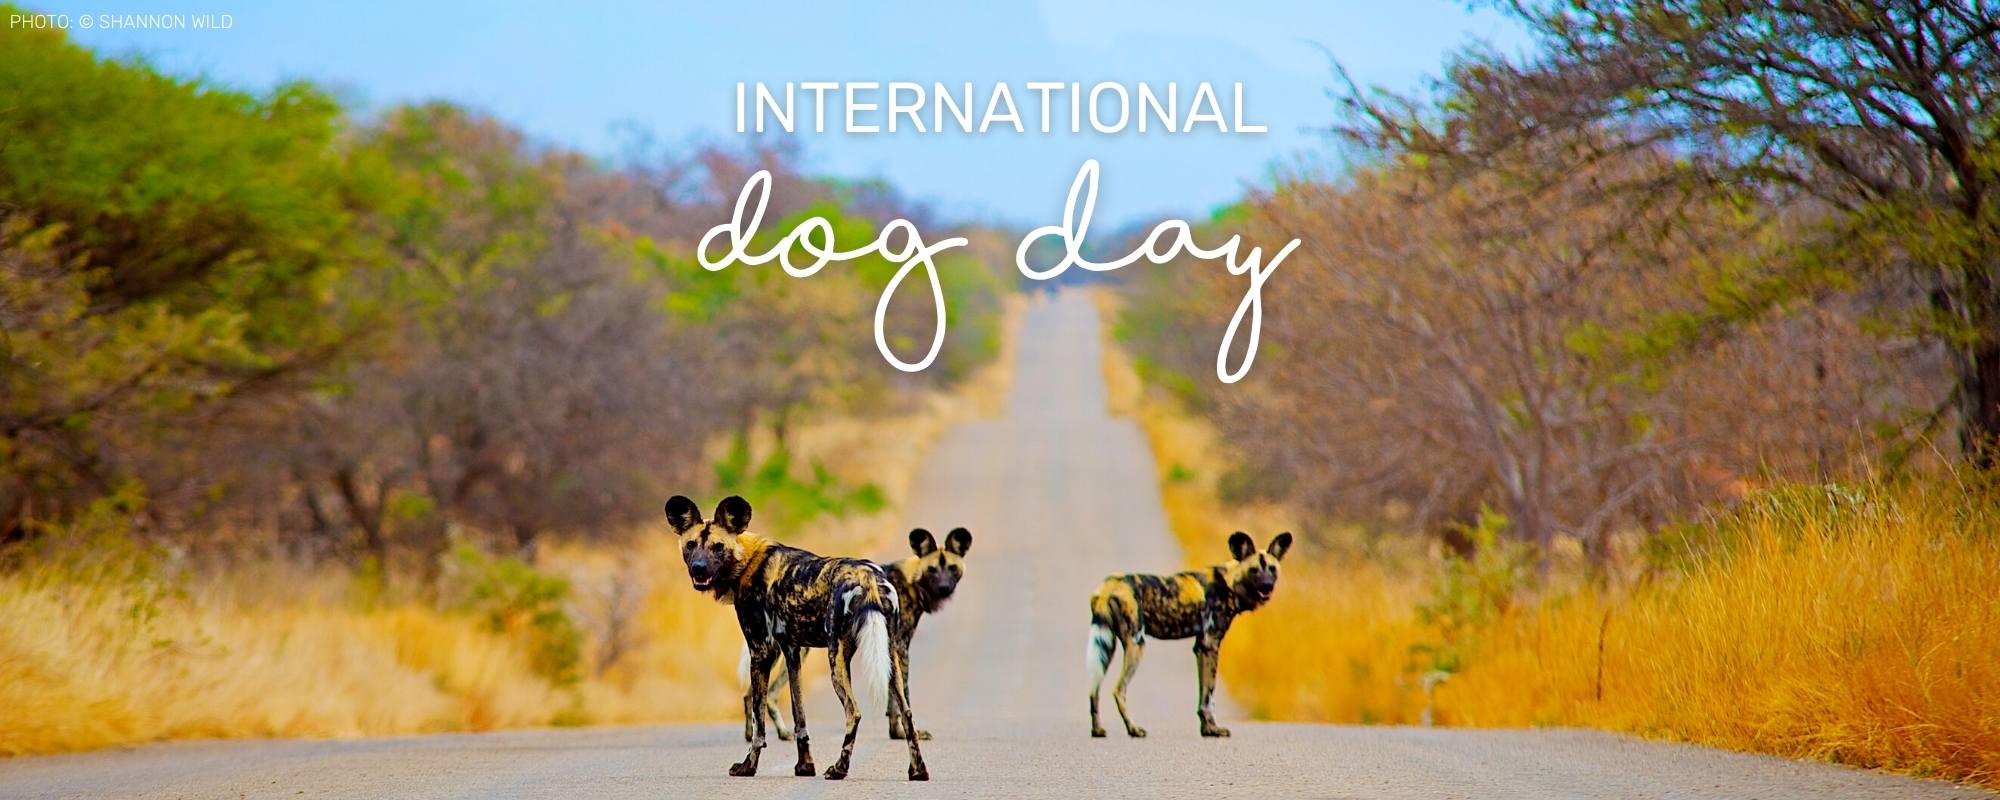 INTERNATIONAL DOG DAY